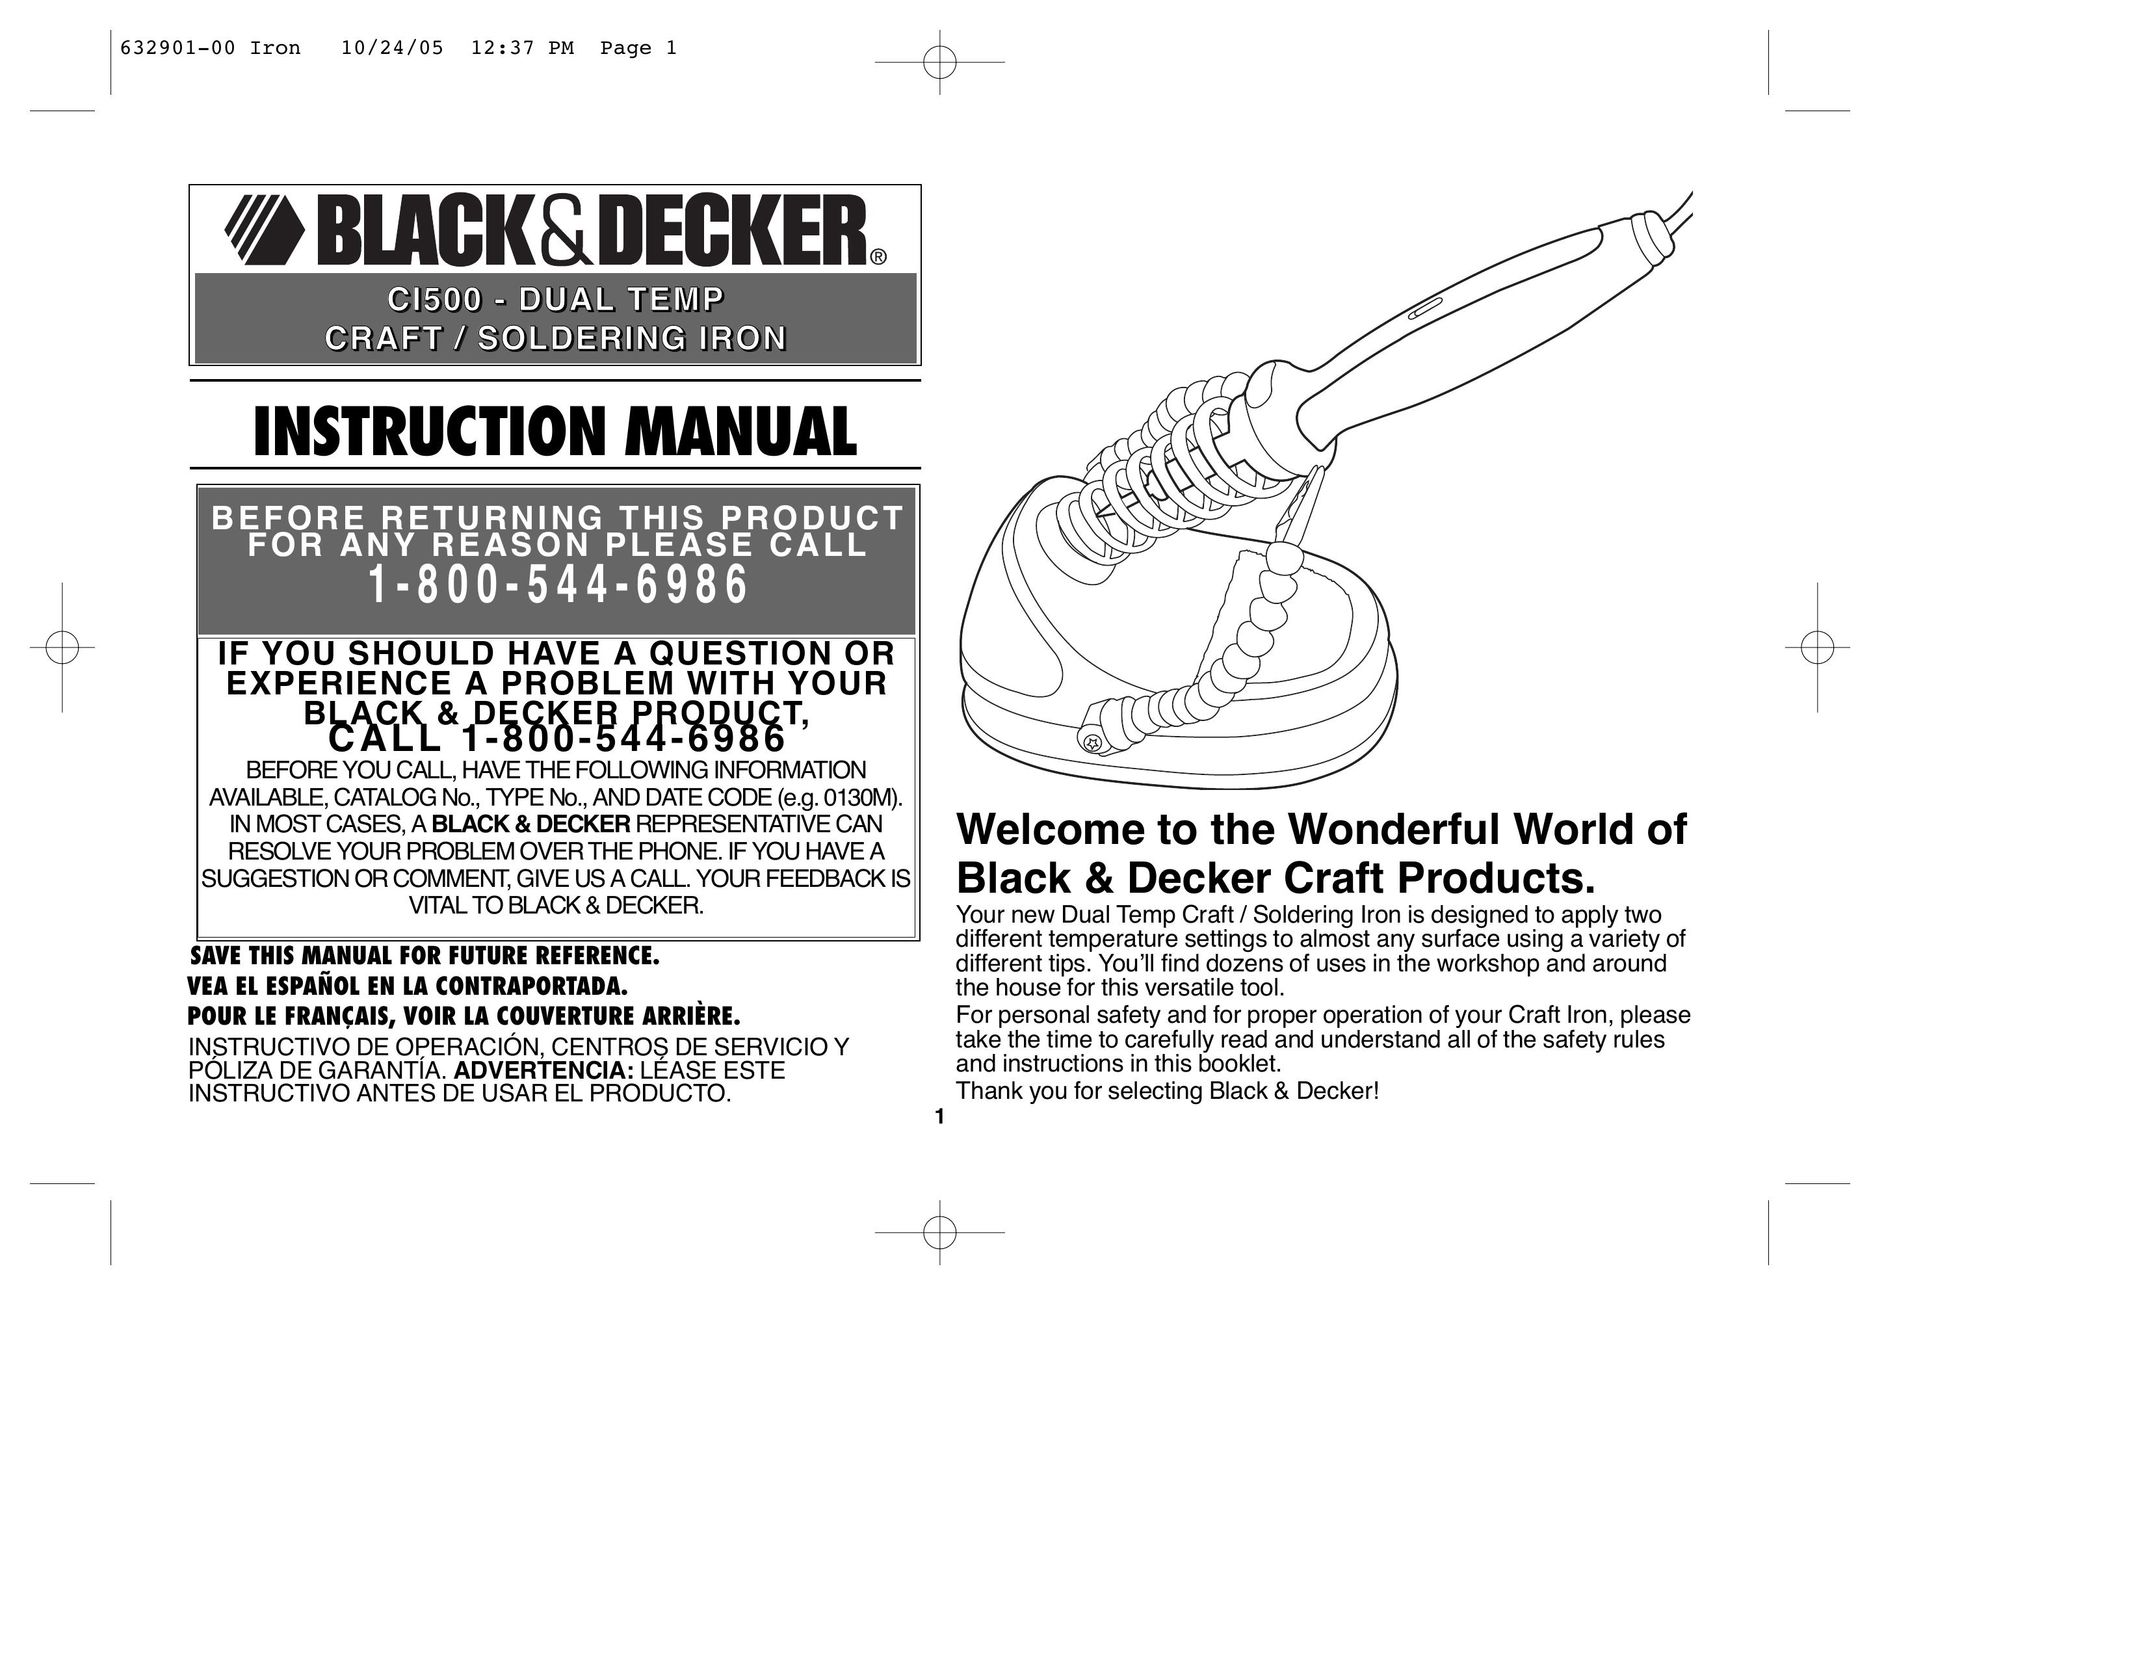 Black & Decker CI500 Soldering Gun User Manual